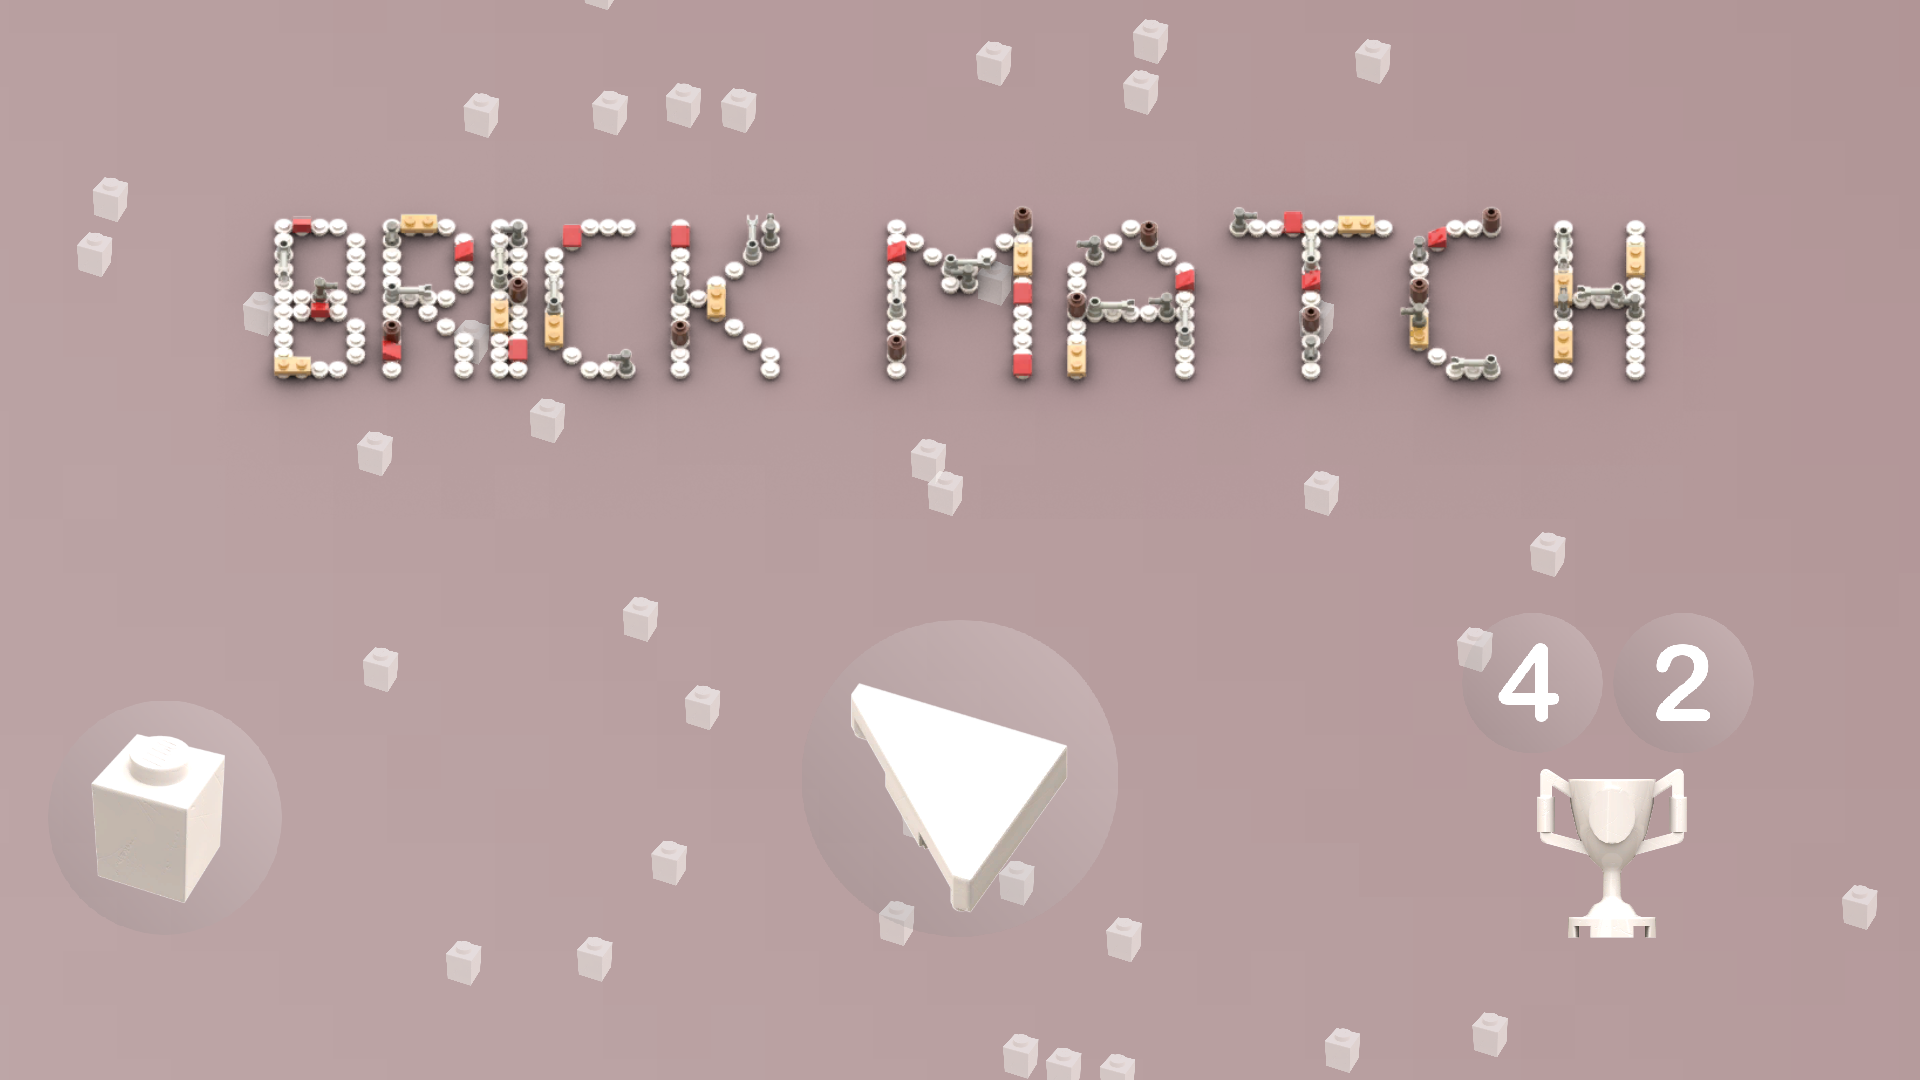 Brick Match